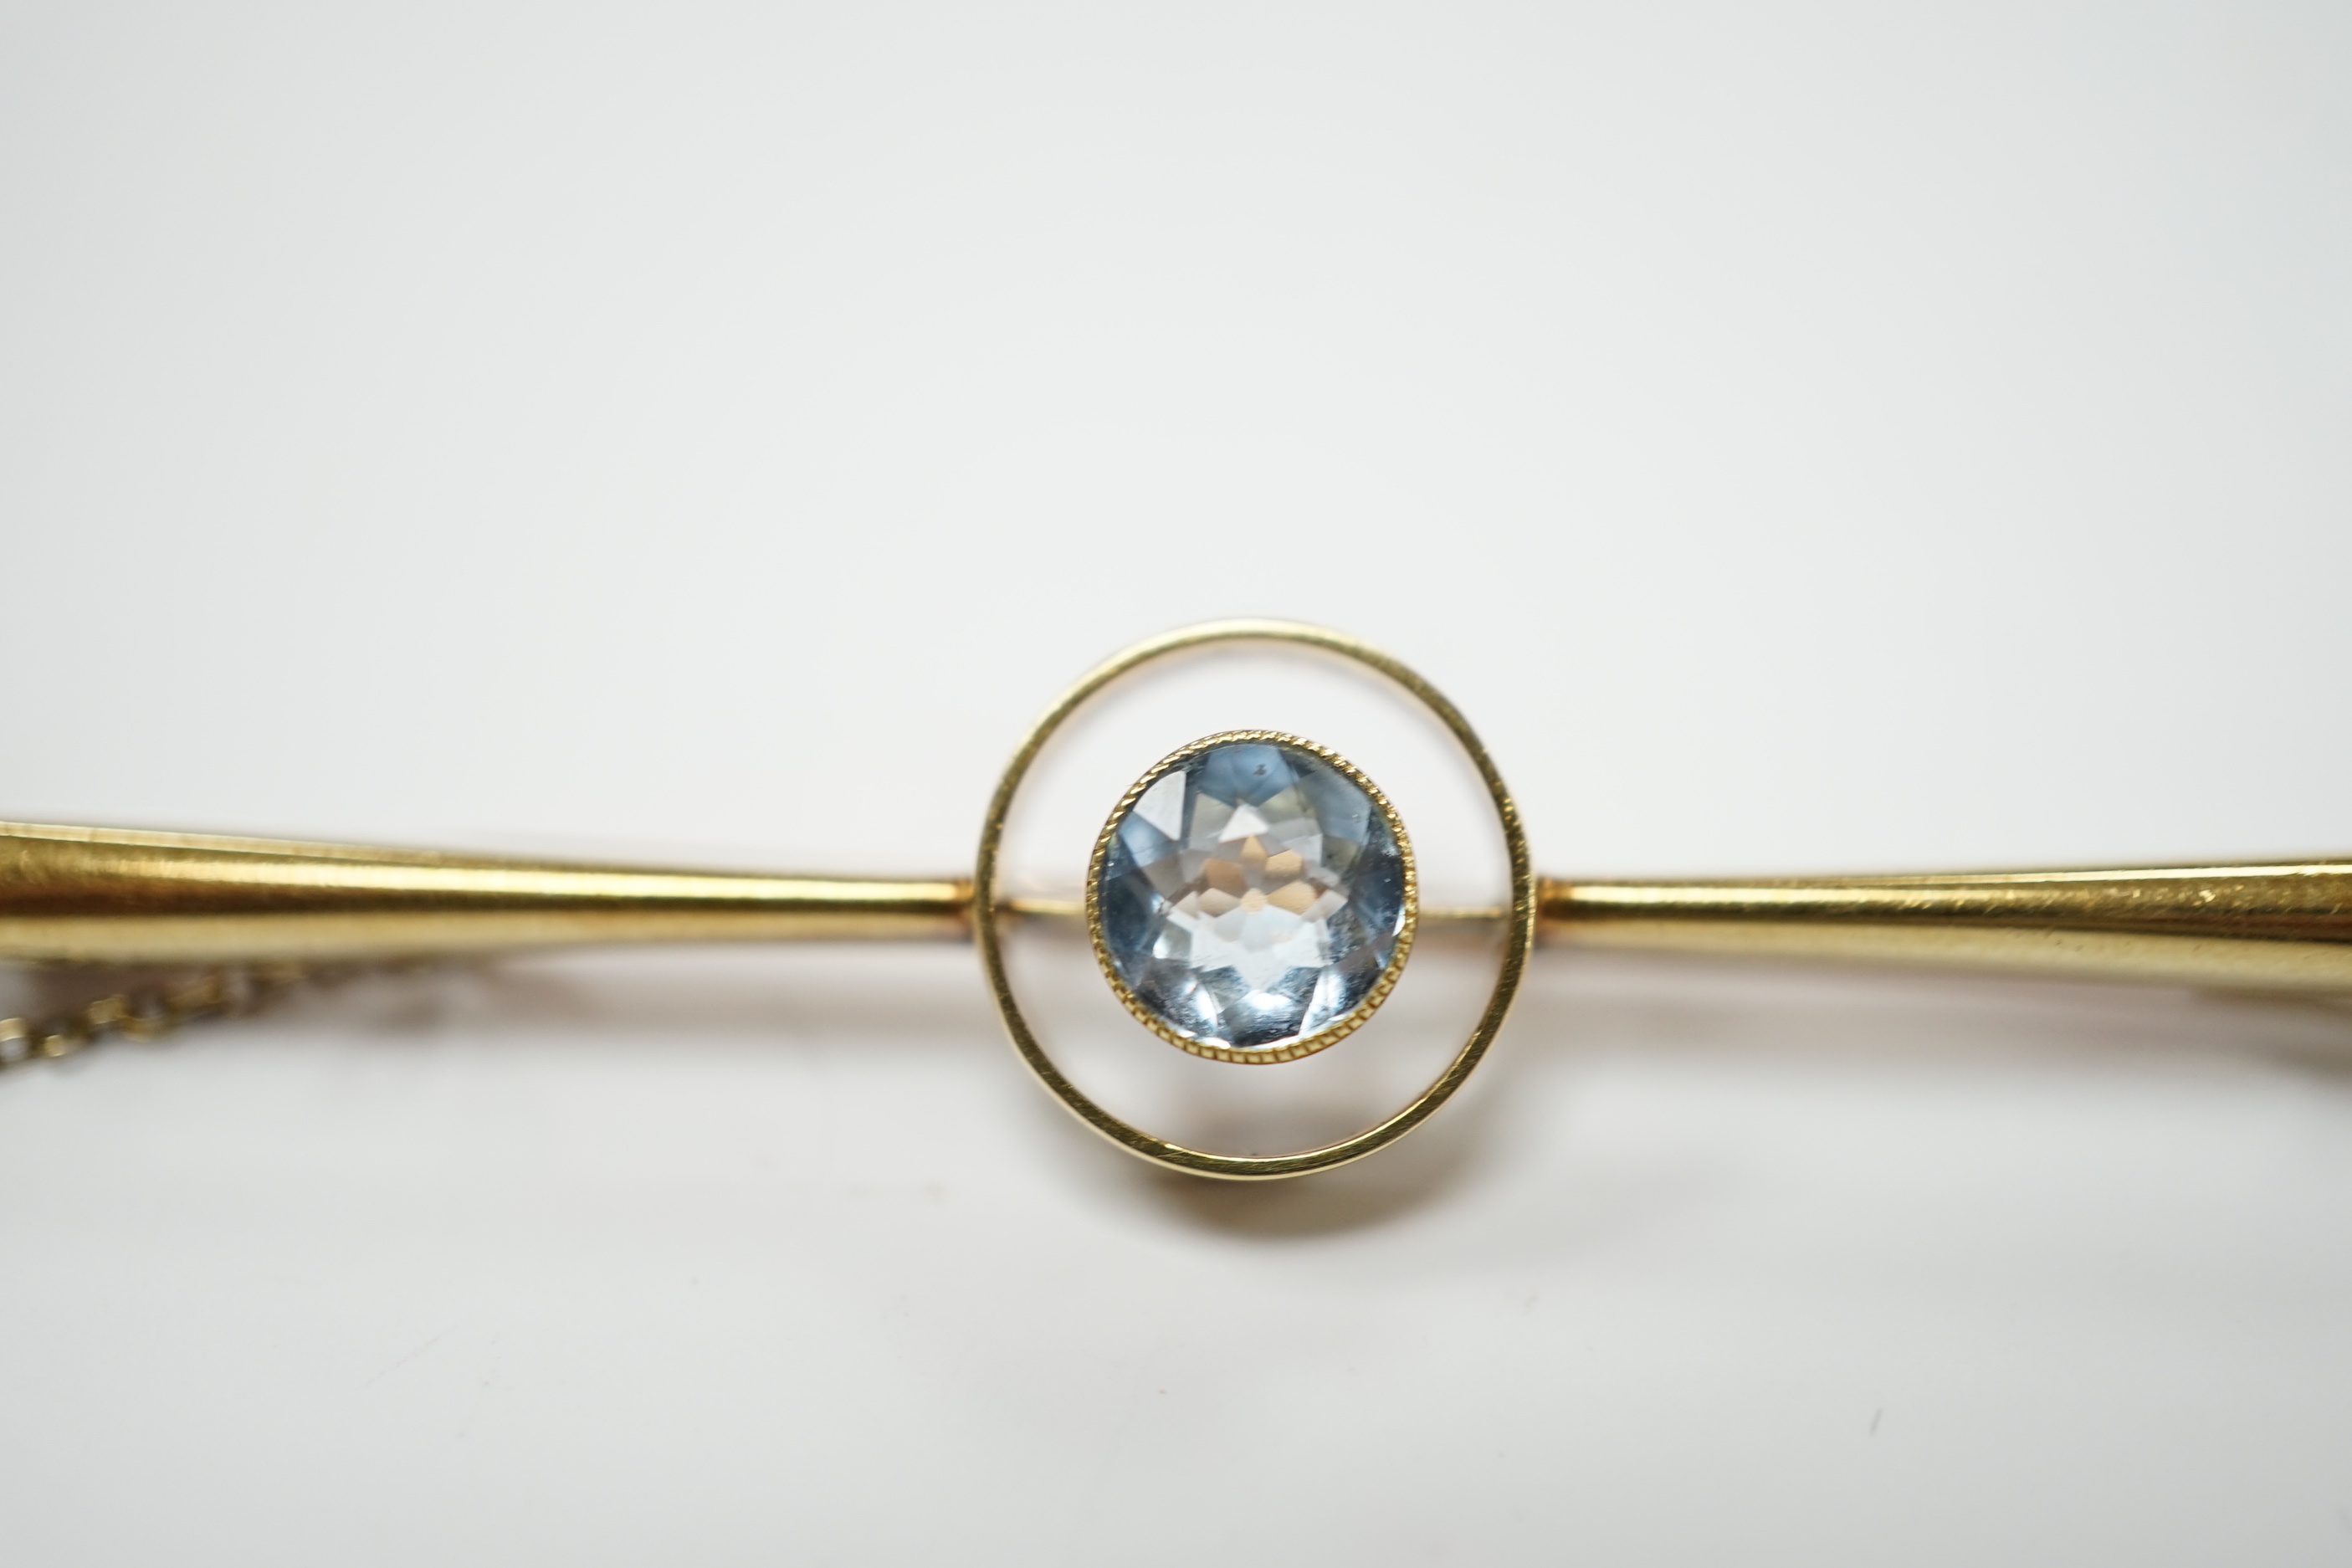 An Edwardian 15ct and single stone blue topaz set bar brooch, 60mm, gross weight 4.1 grams.